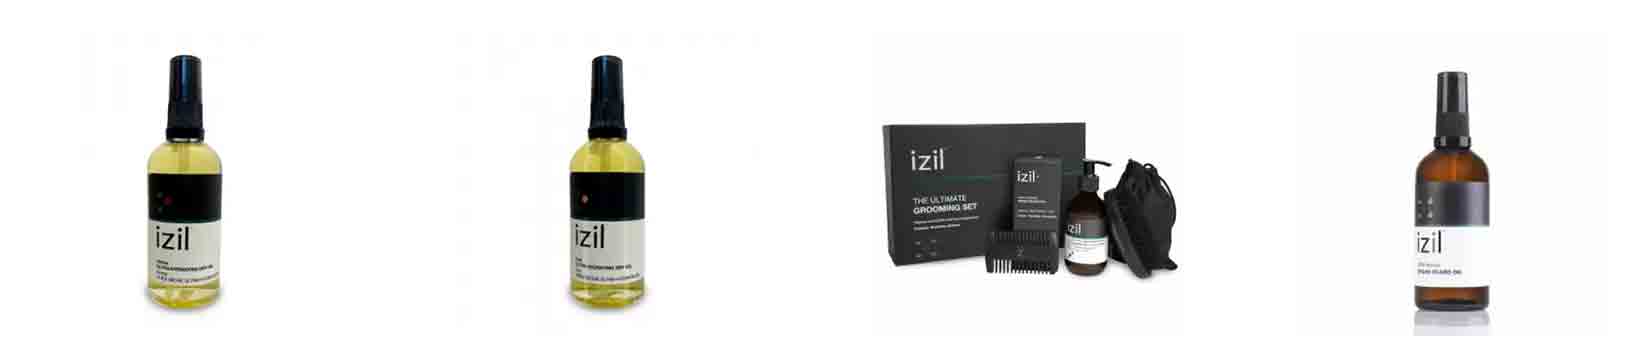 Izil Beauty Codes For Men Beauty Items